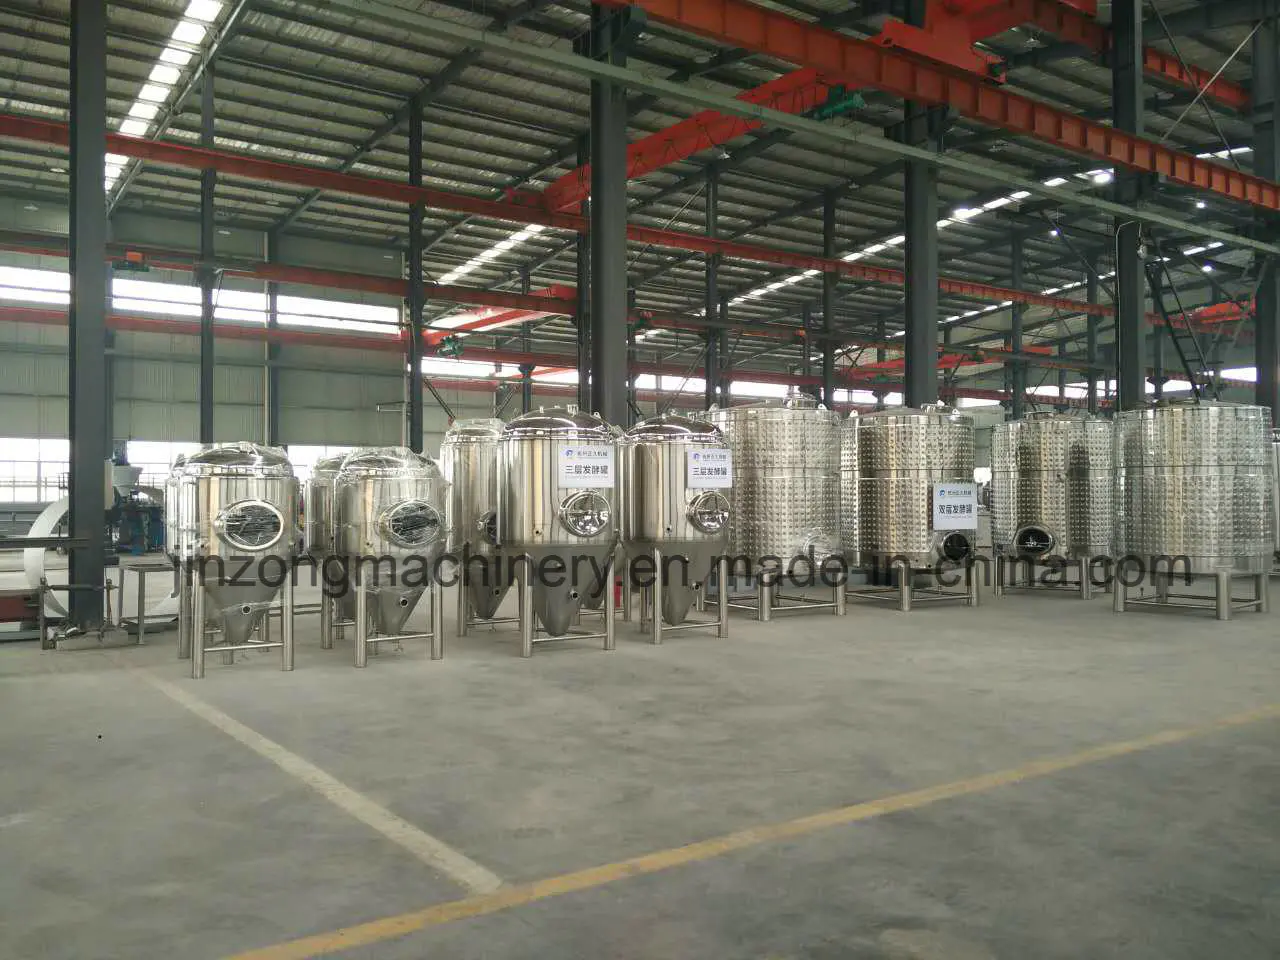 Stainless Steel Jacket Beer Fermentation Tank